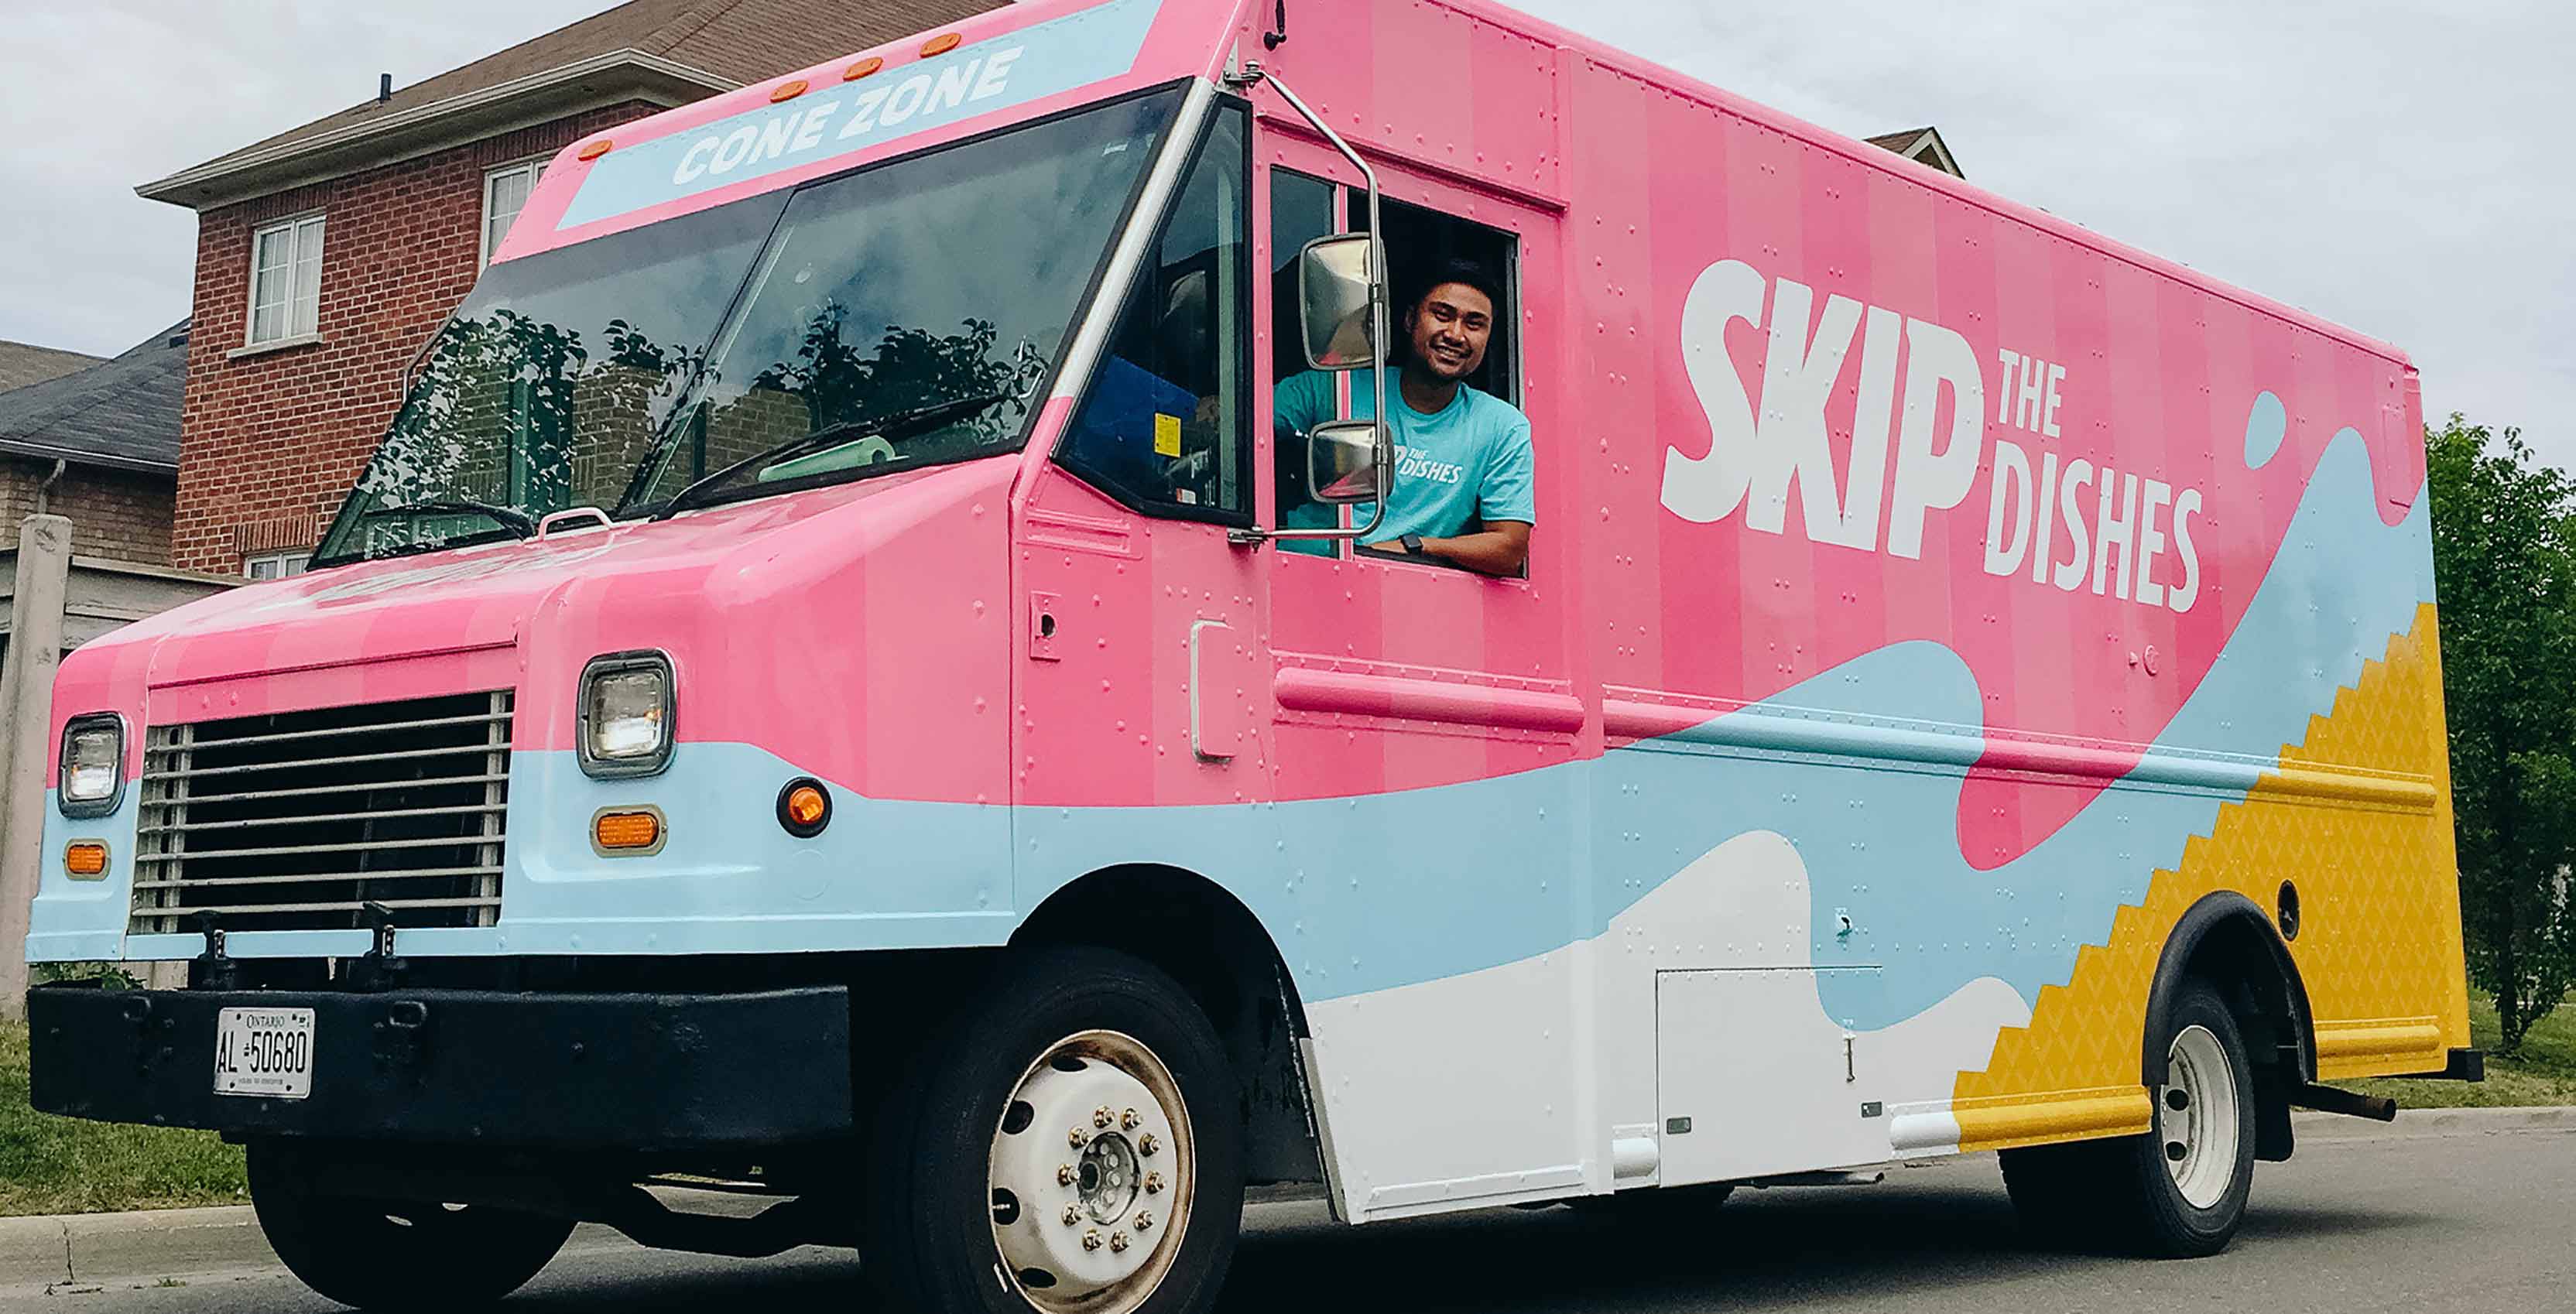 SkipTheDishes ice cream truck